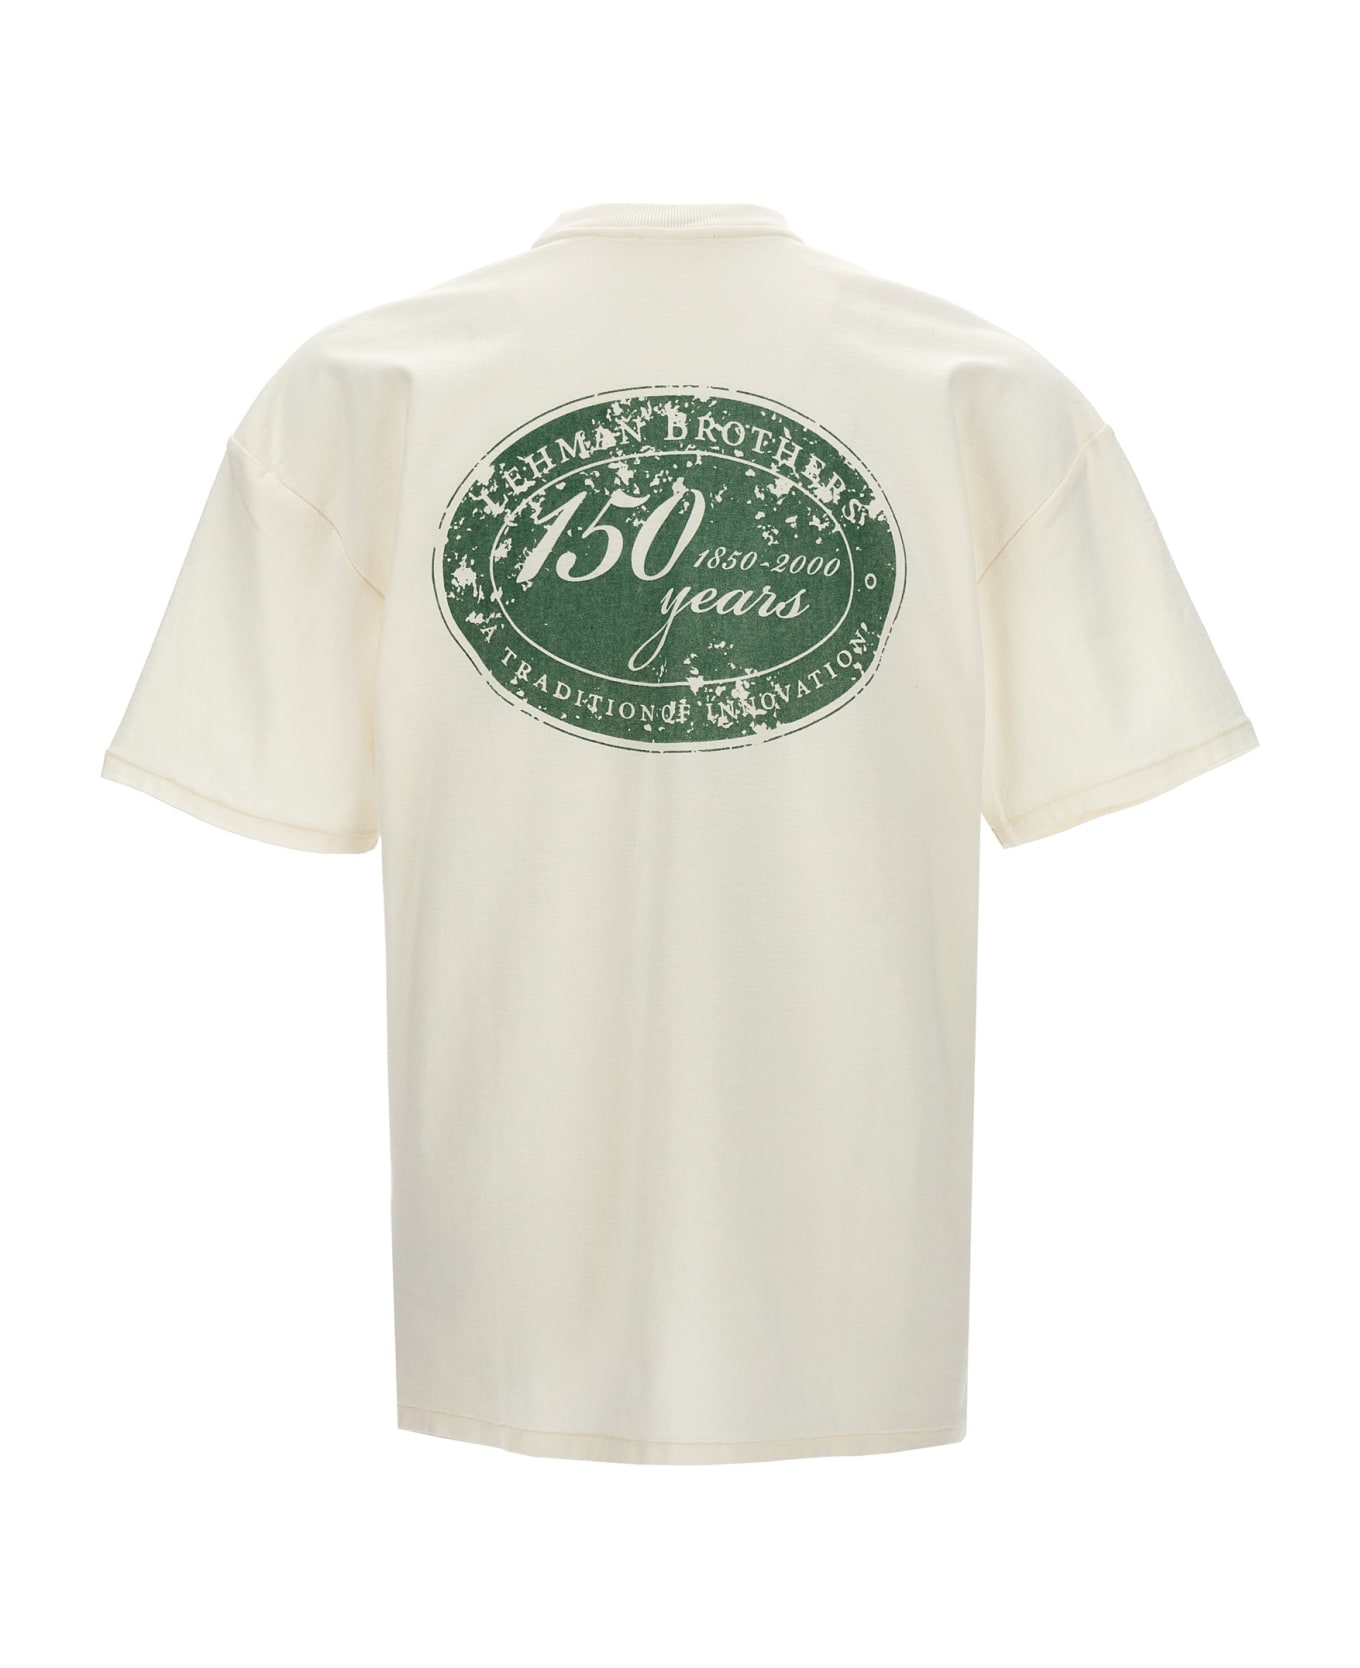 1989 Studio 'lehman Brothers' T-shirt - White